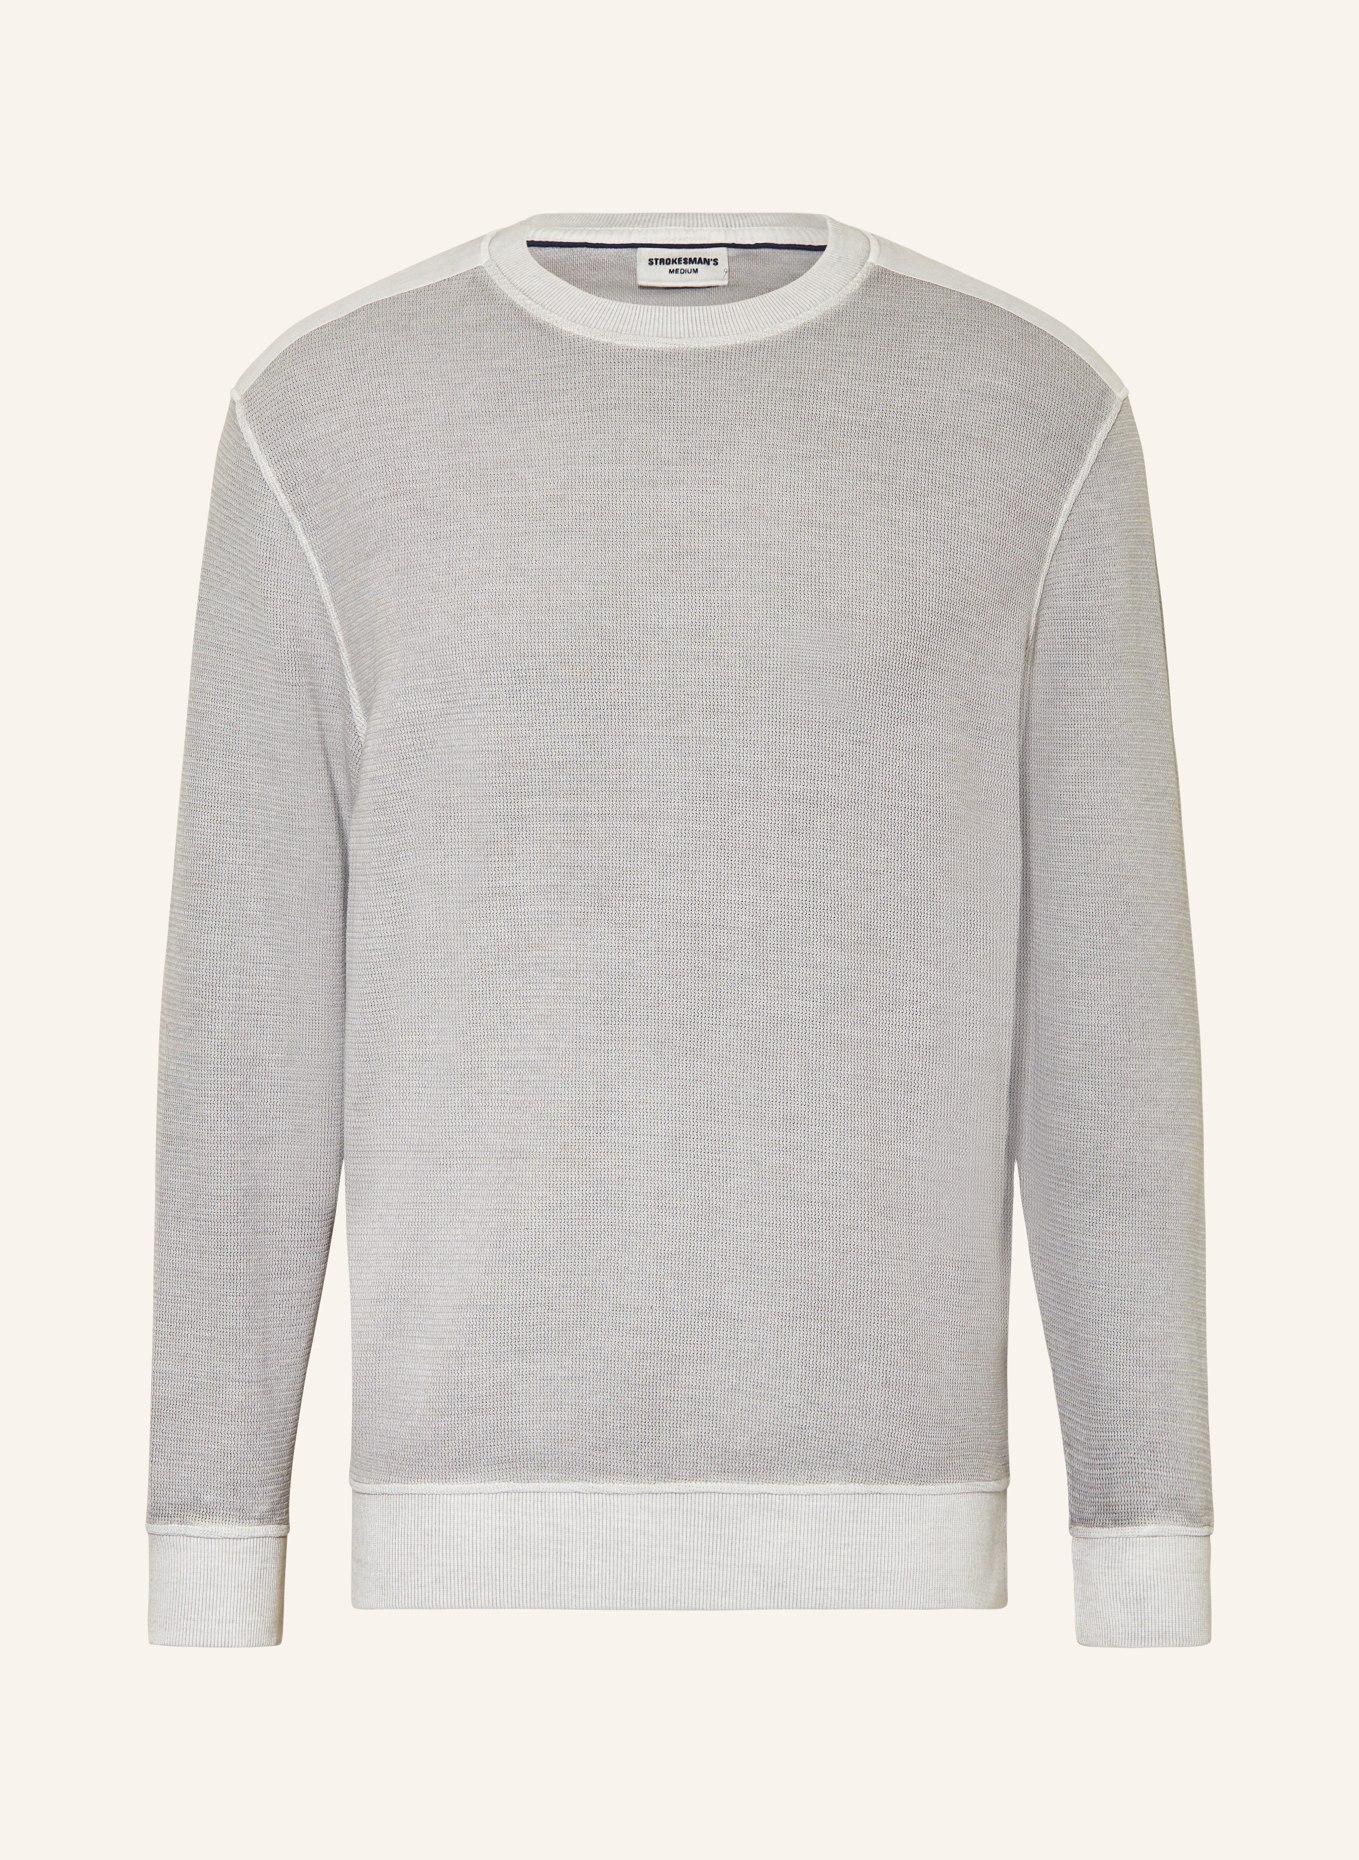 STROKESMAN'S Sweater, Color: GRAY (Image 1)